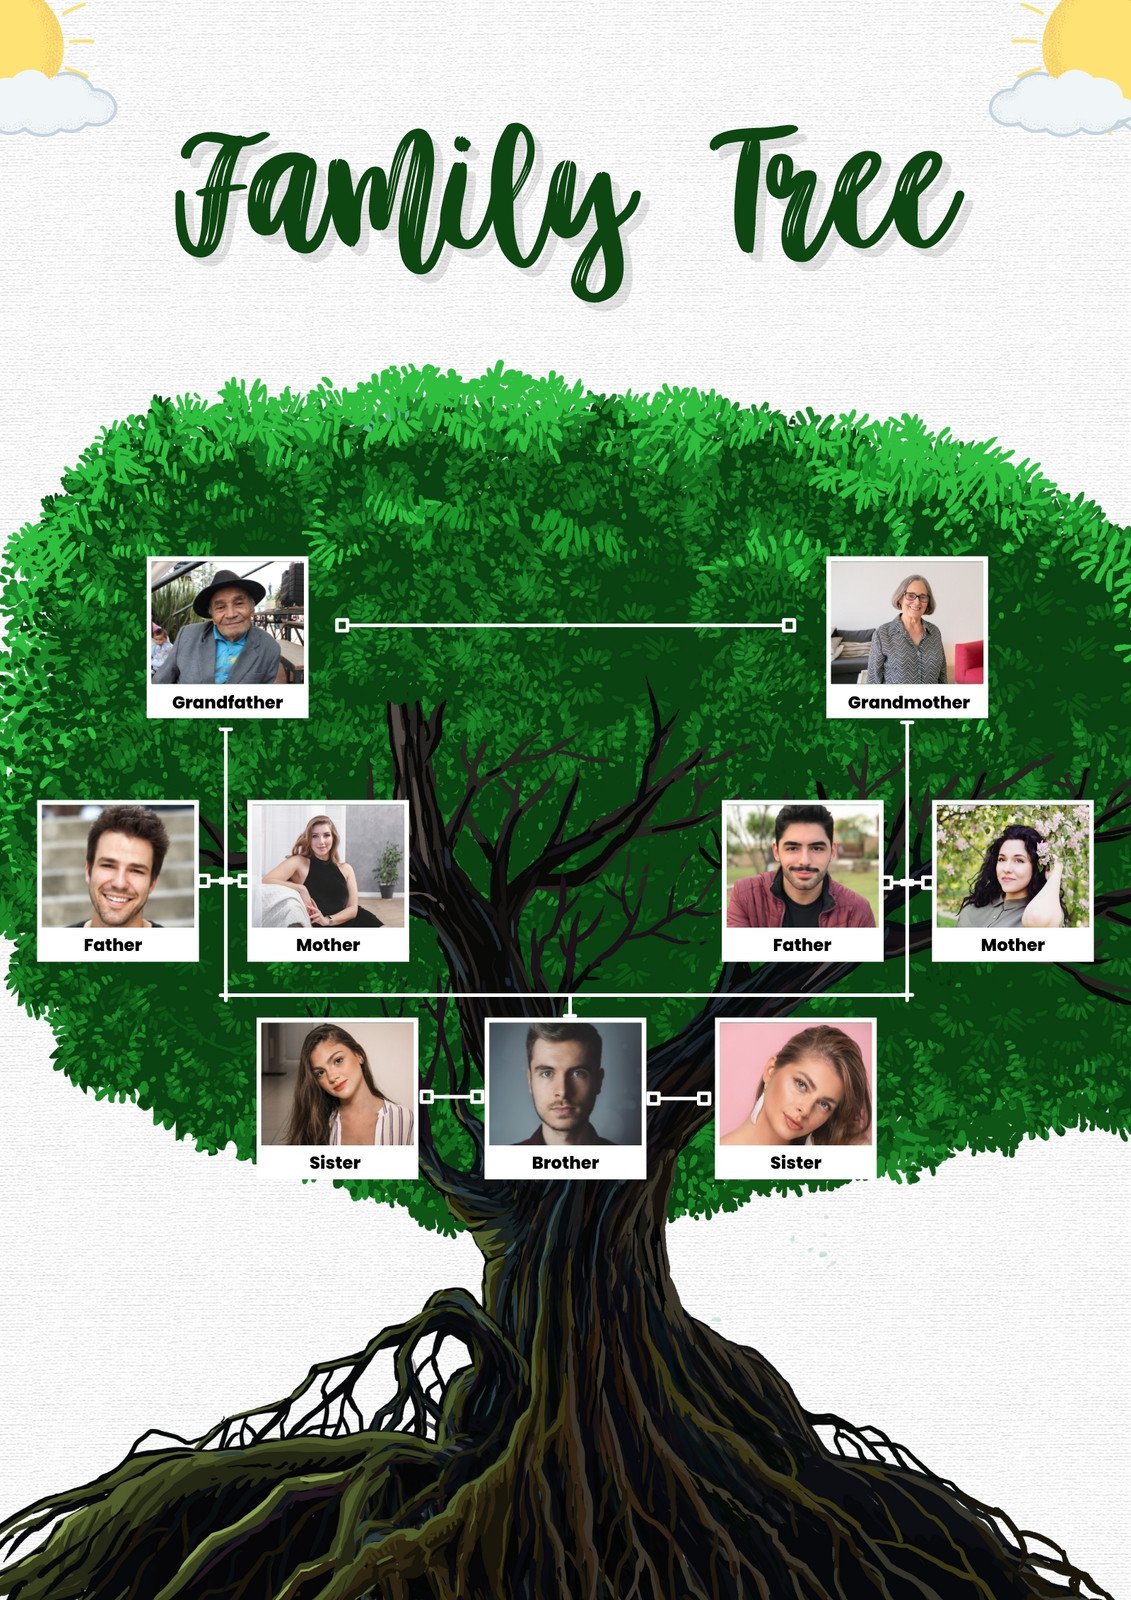  Family Tree Workbook, Family Tree Organizer Book 16